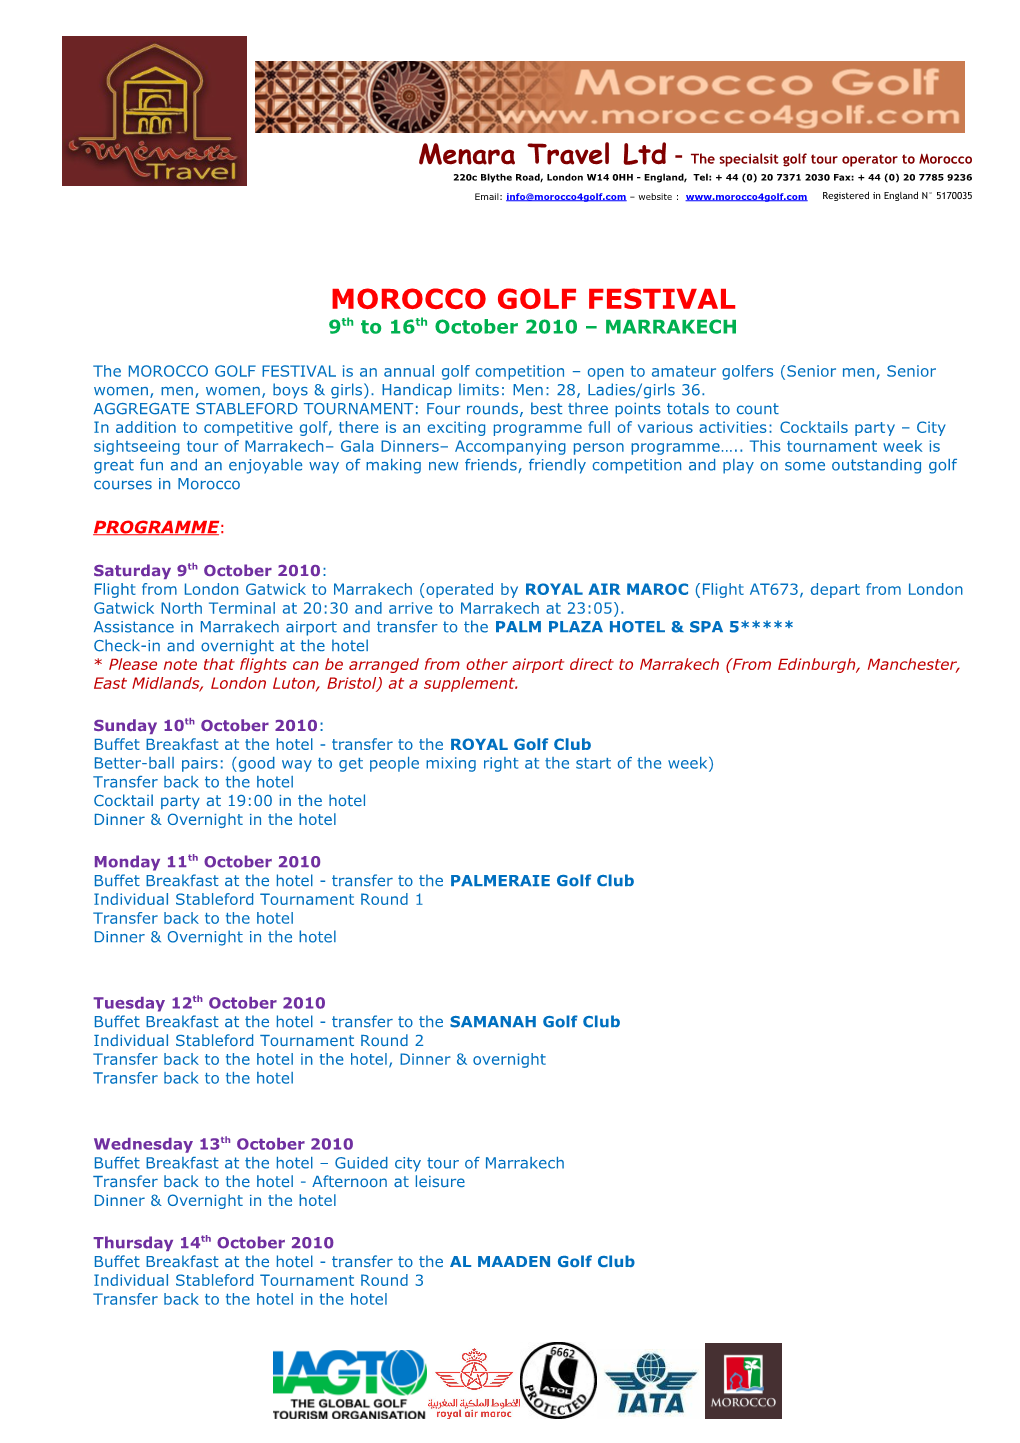 Menara Travel Ltd the Specialsit Golf Tour Operator to Morocco